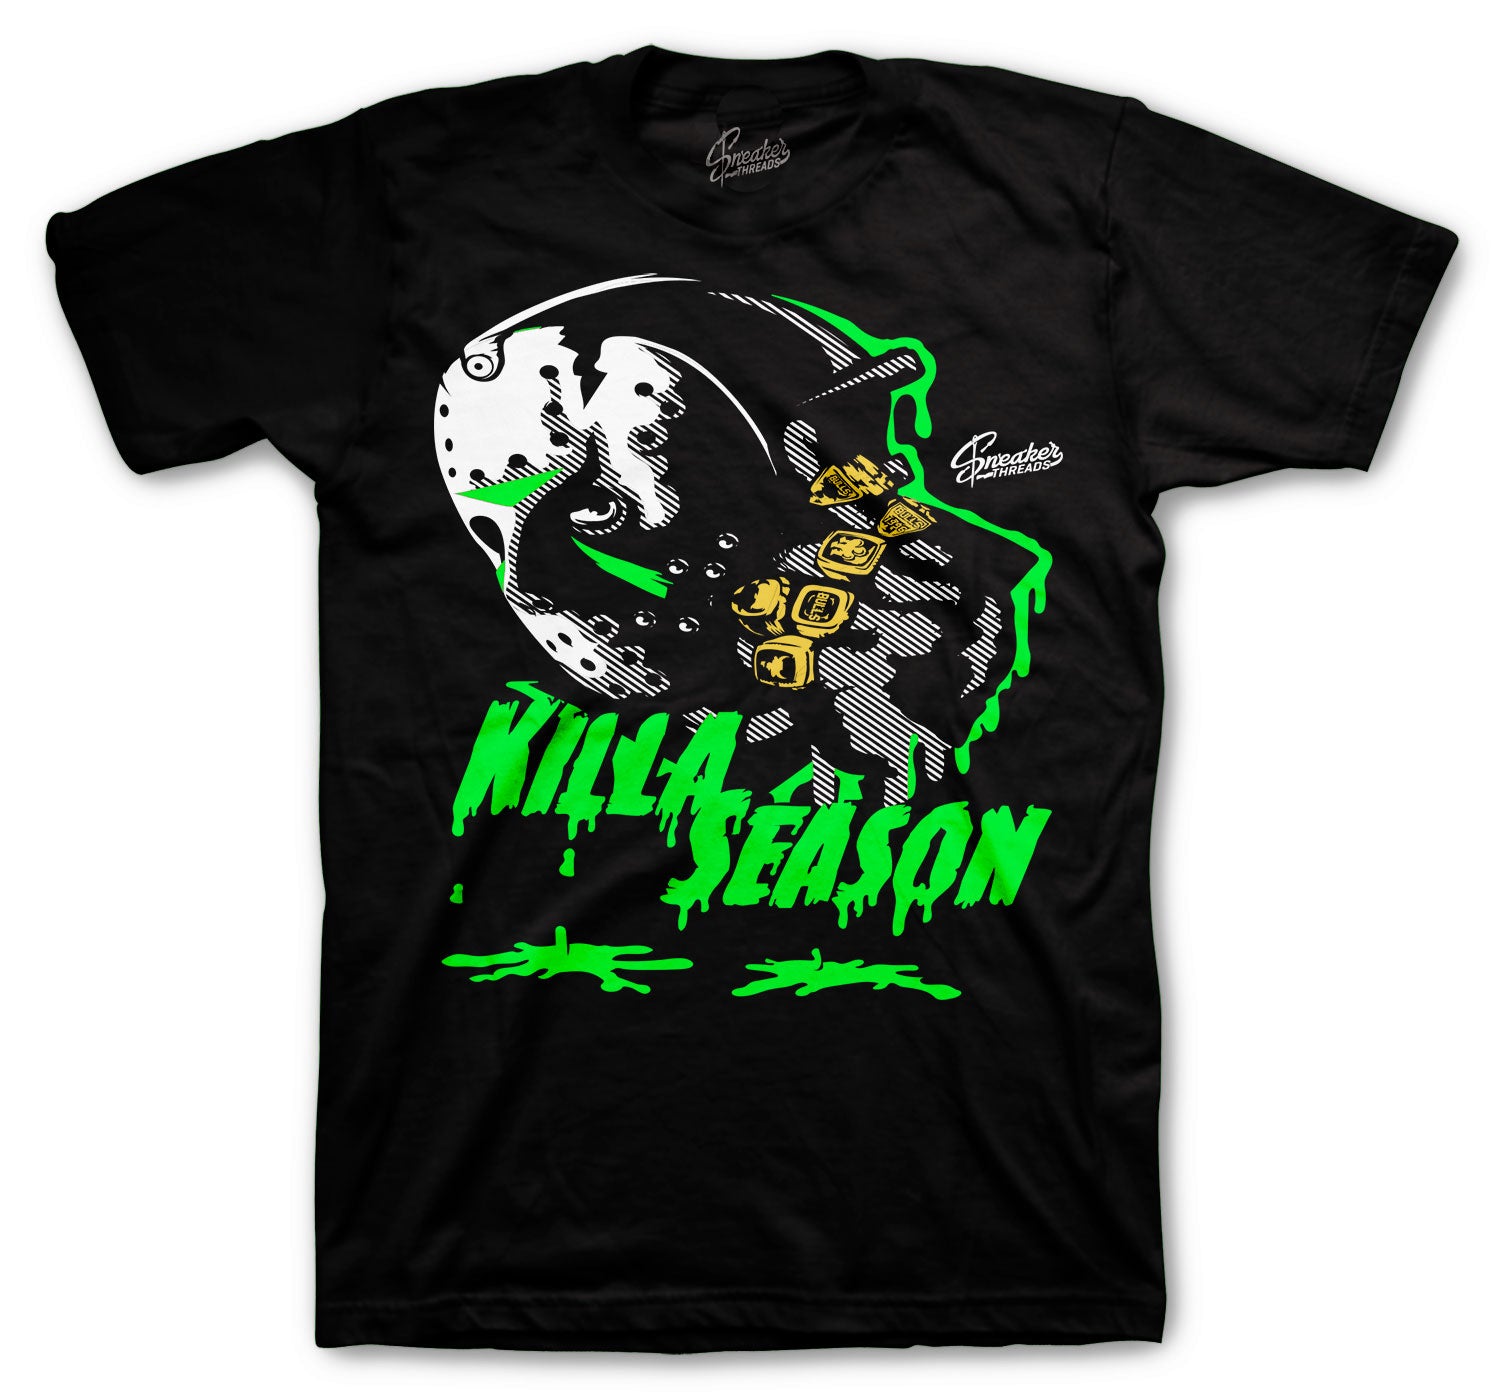 Retro 6 Electric Green Shirt - Killa Season - Black